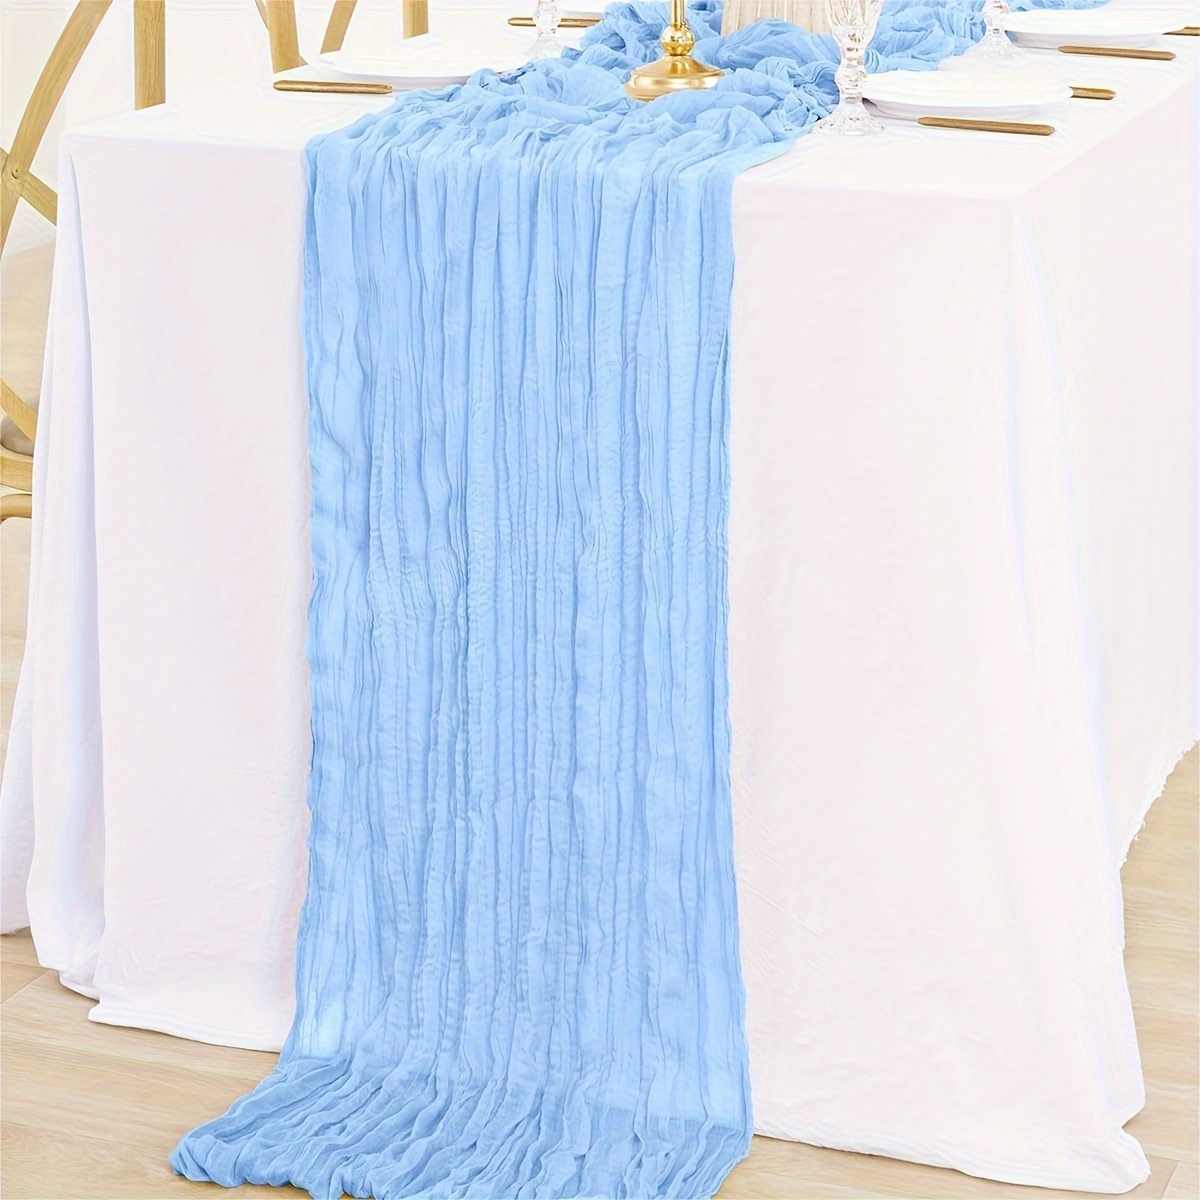 

Elegant Light Blue Gauze Table Runner - 3x10 Ft, Vintage Sheer Pleated Design For Wedding Receptions & Party Decor, Polyester